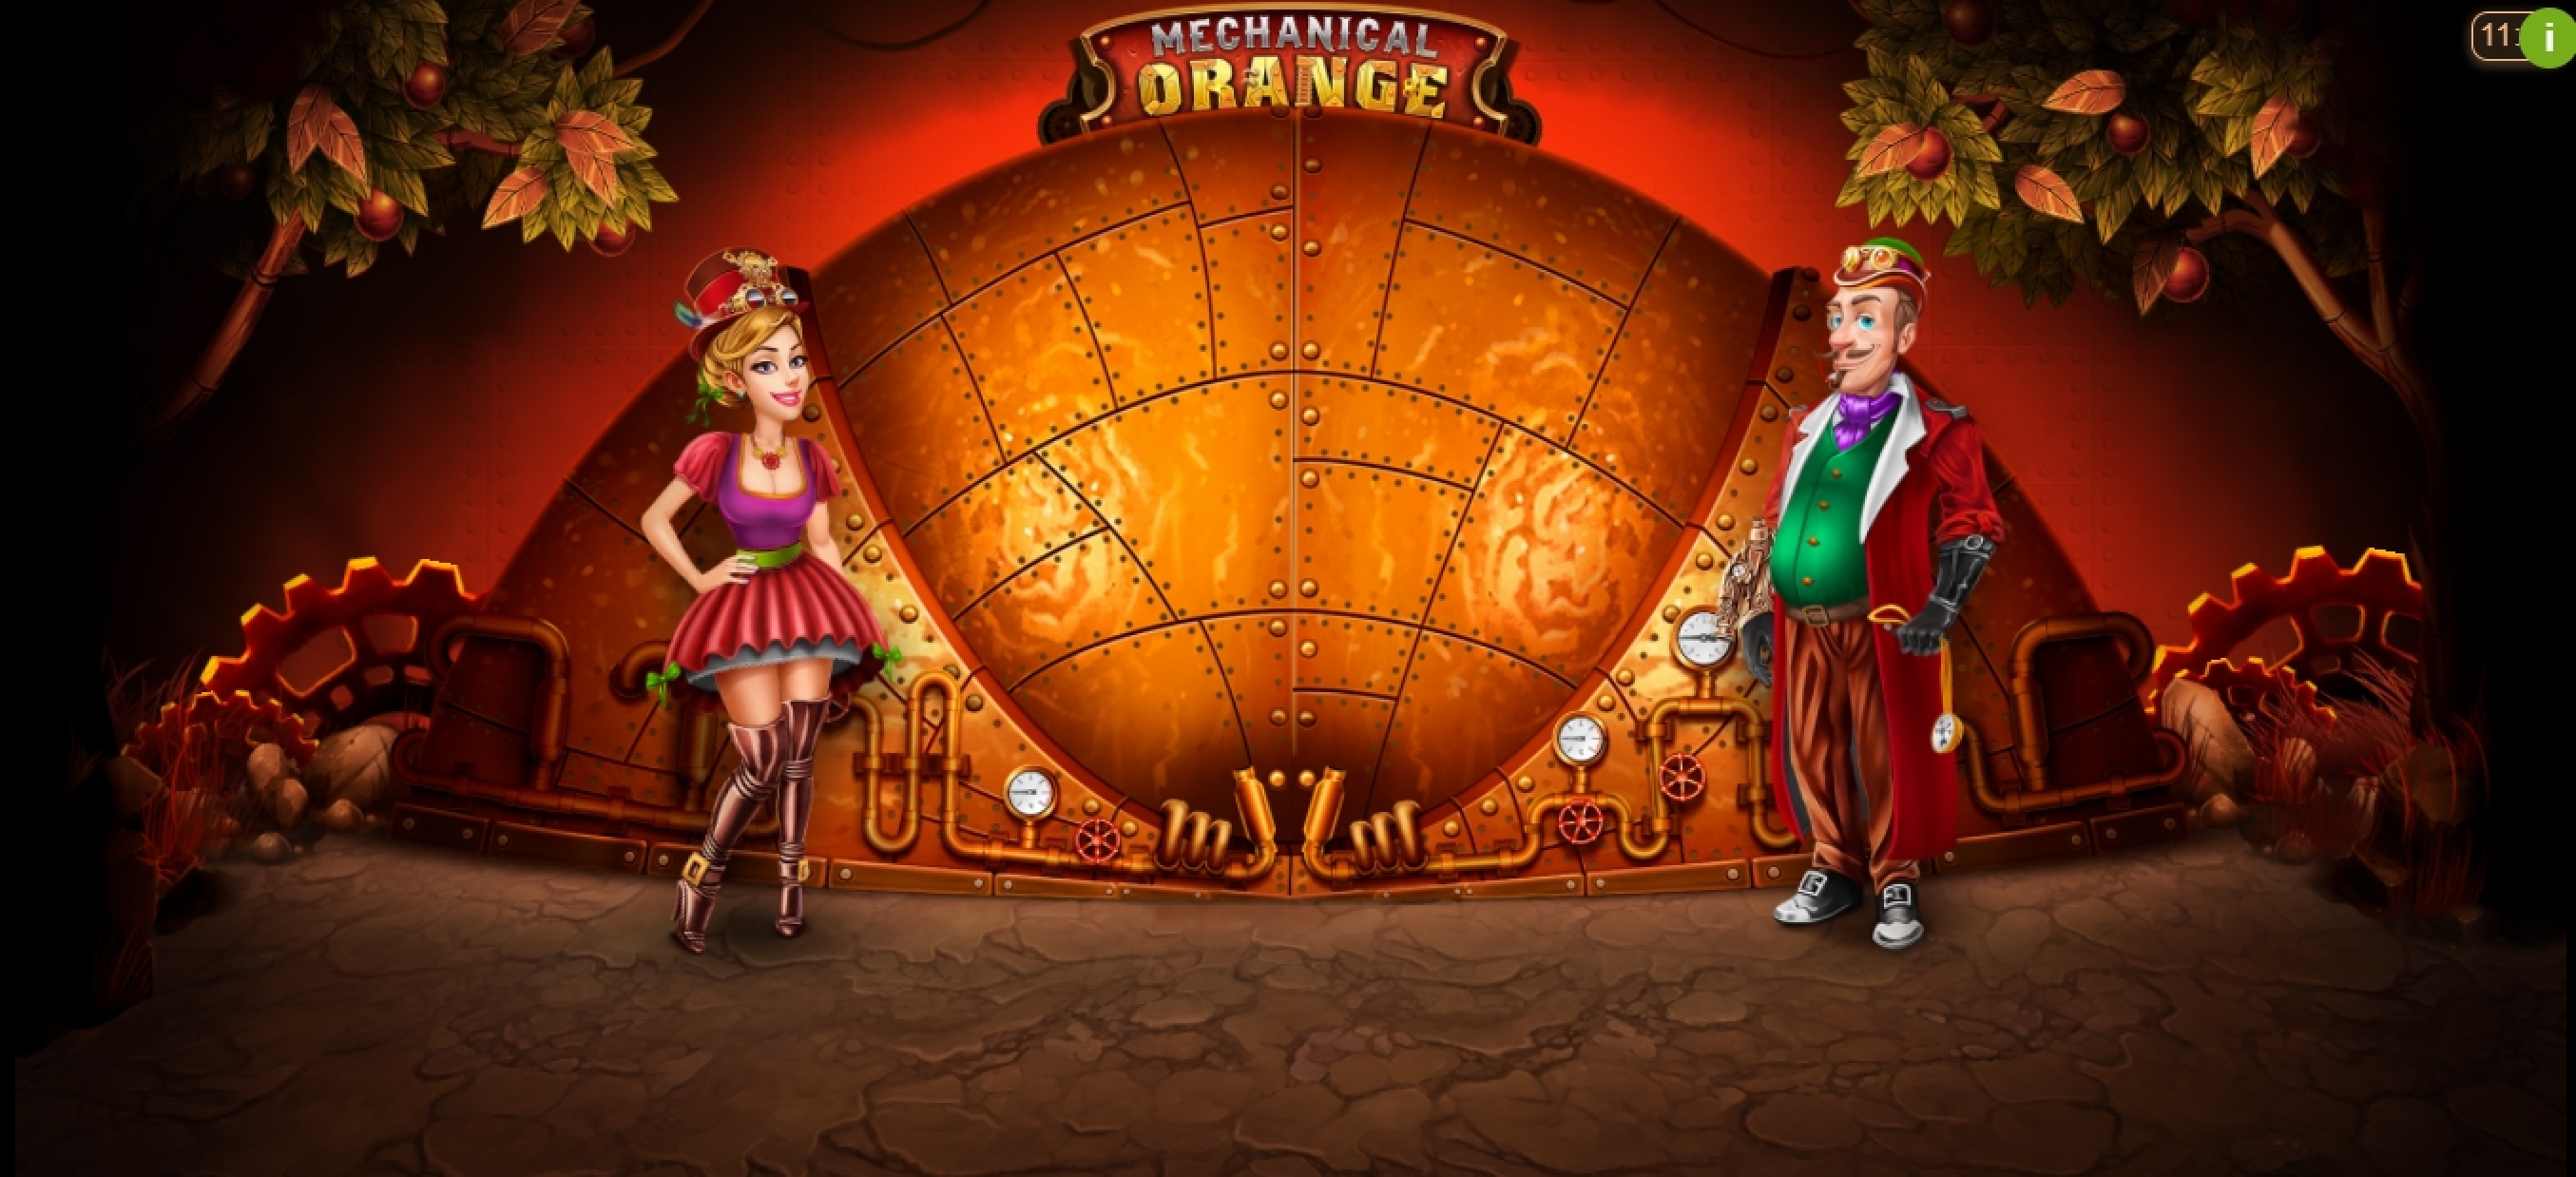 Play Mechanical Orange Free Casino Slot Game by BGAMING